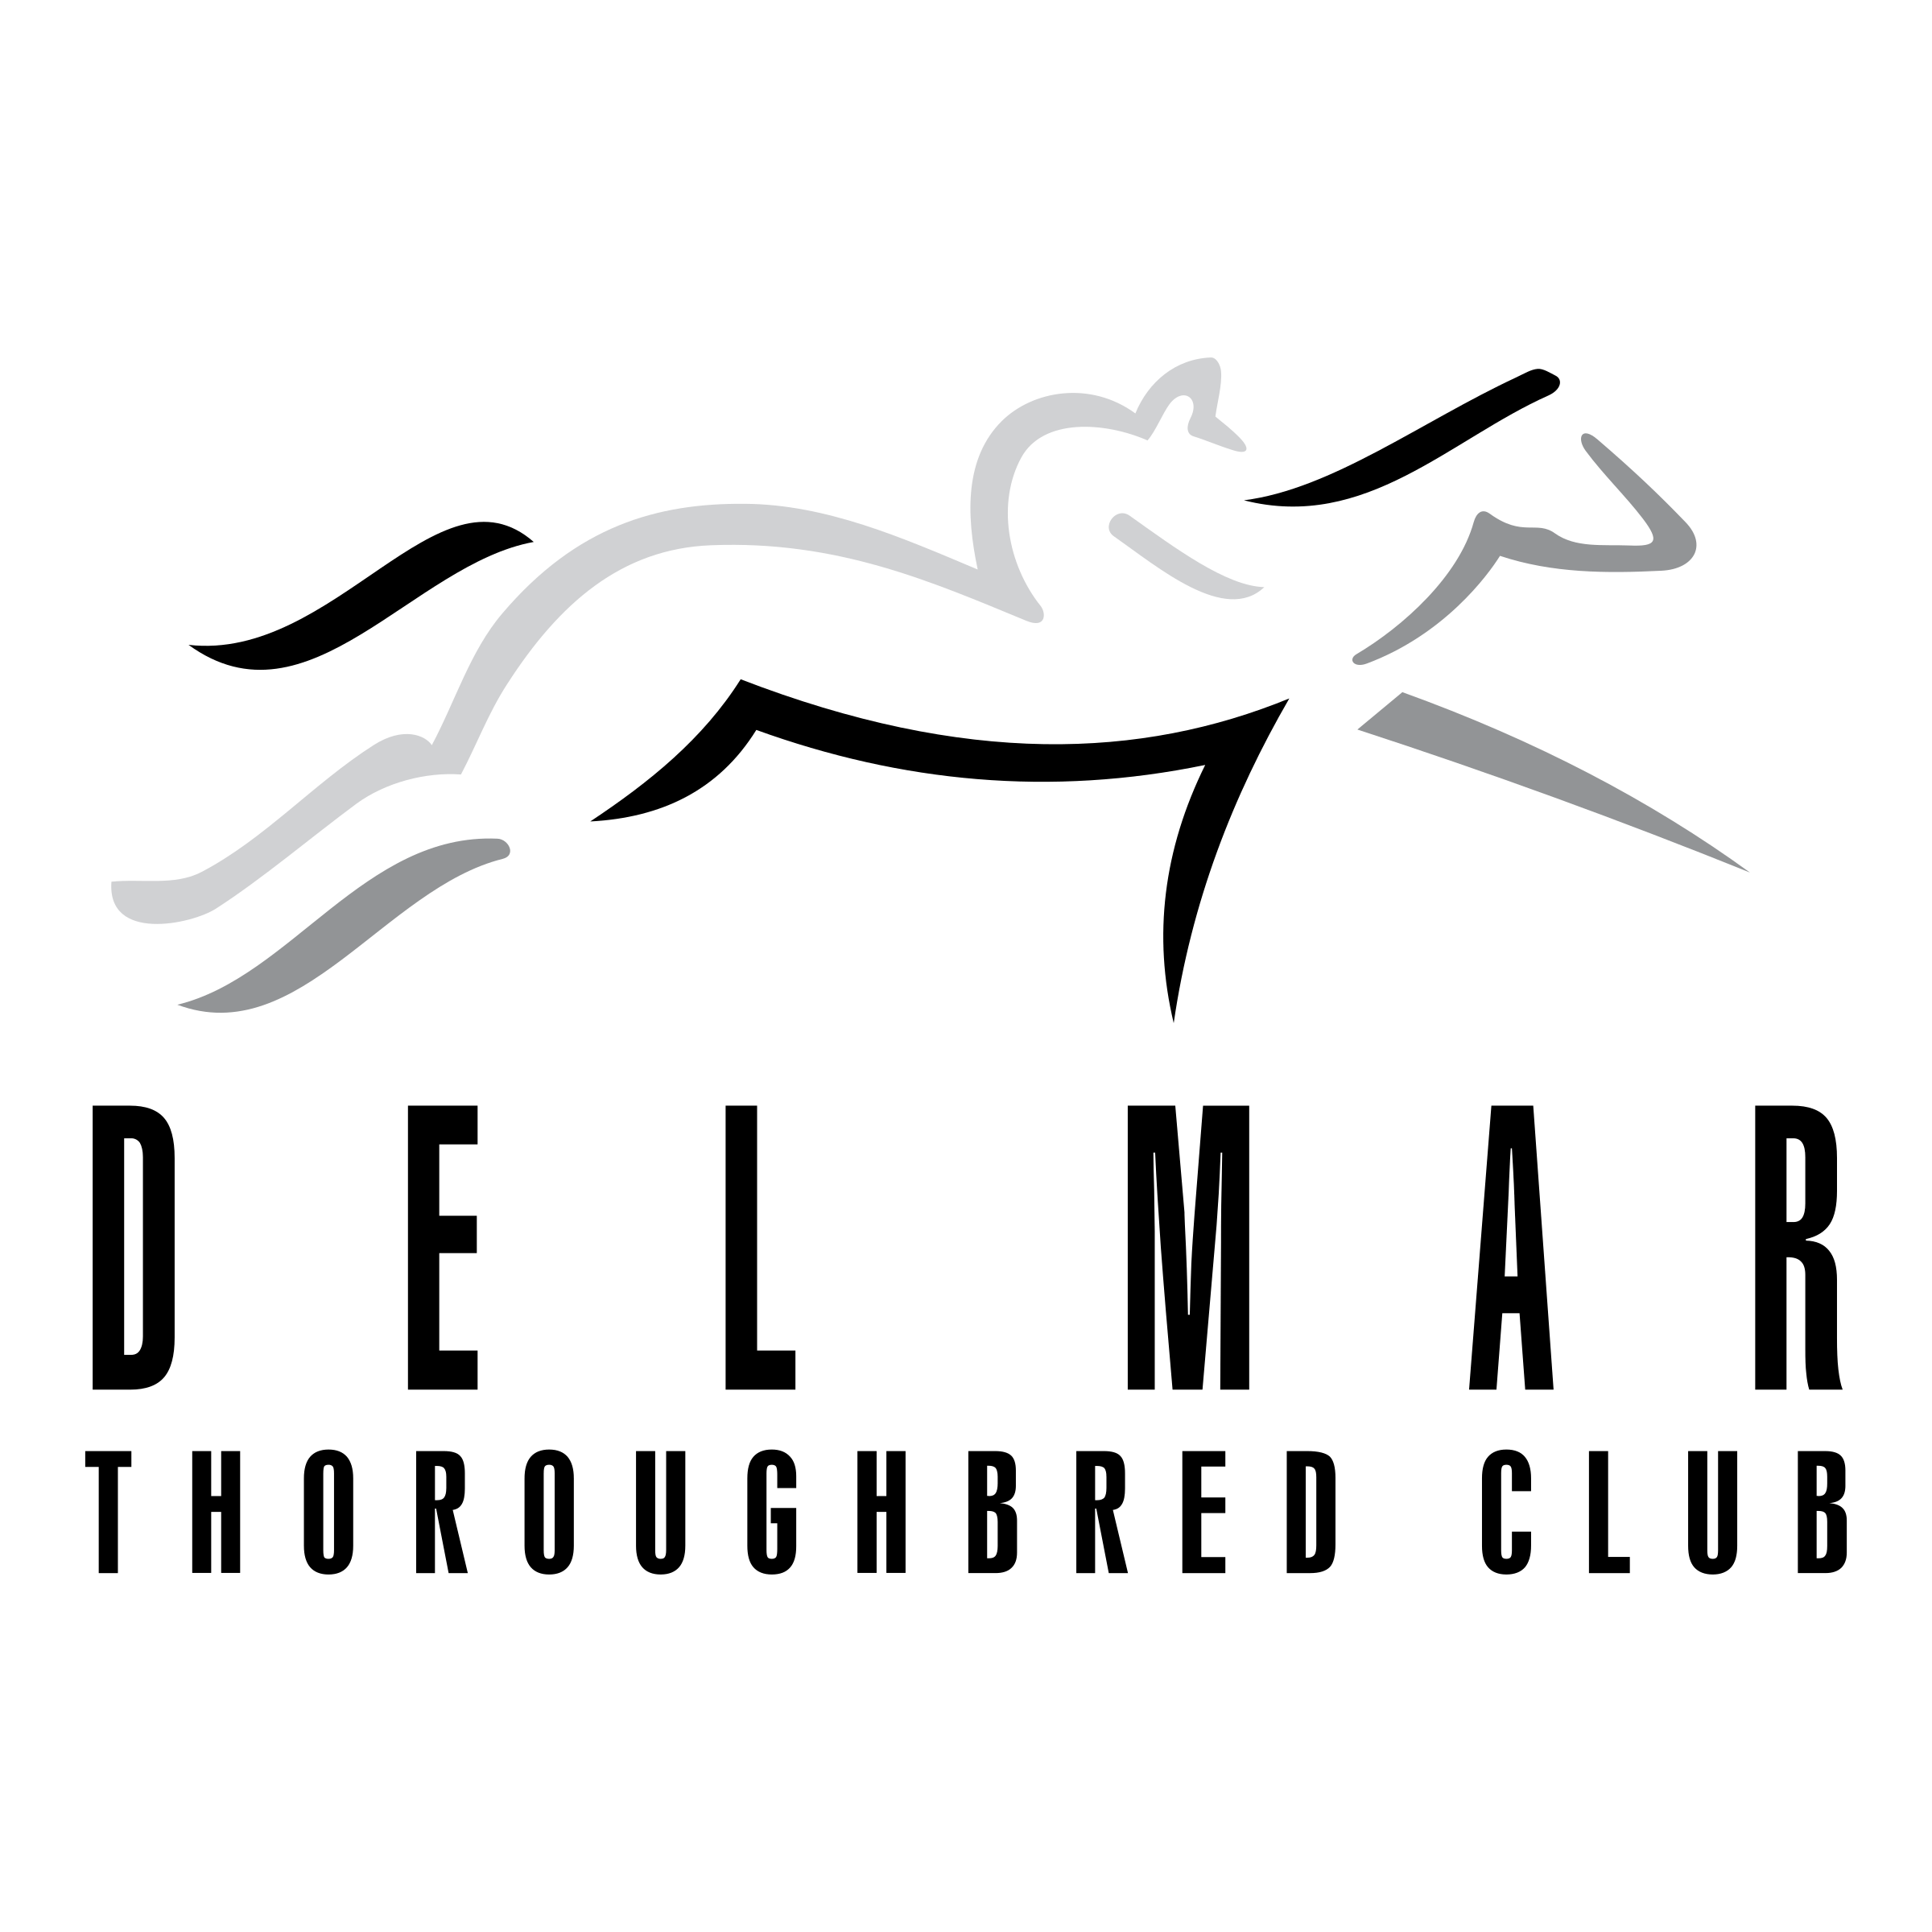 Thoroughbred Logo - Del Mar Thoroughbred Club Logo PNG Transparent & SVG Vector